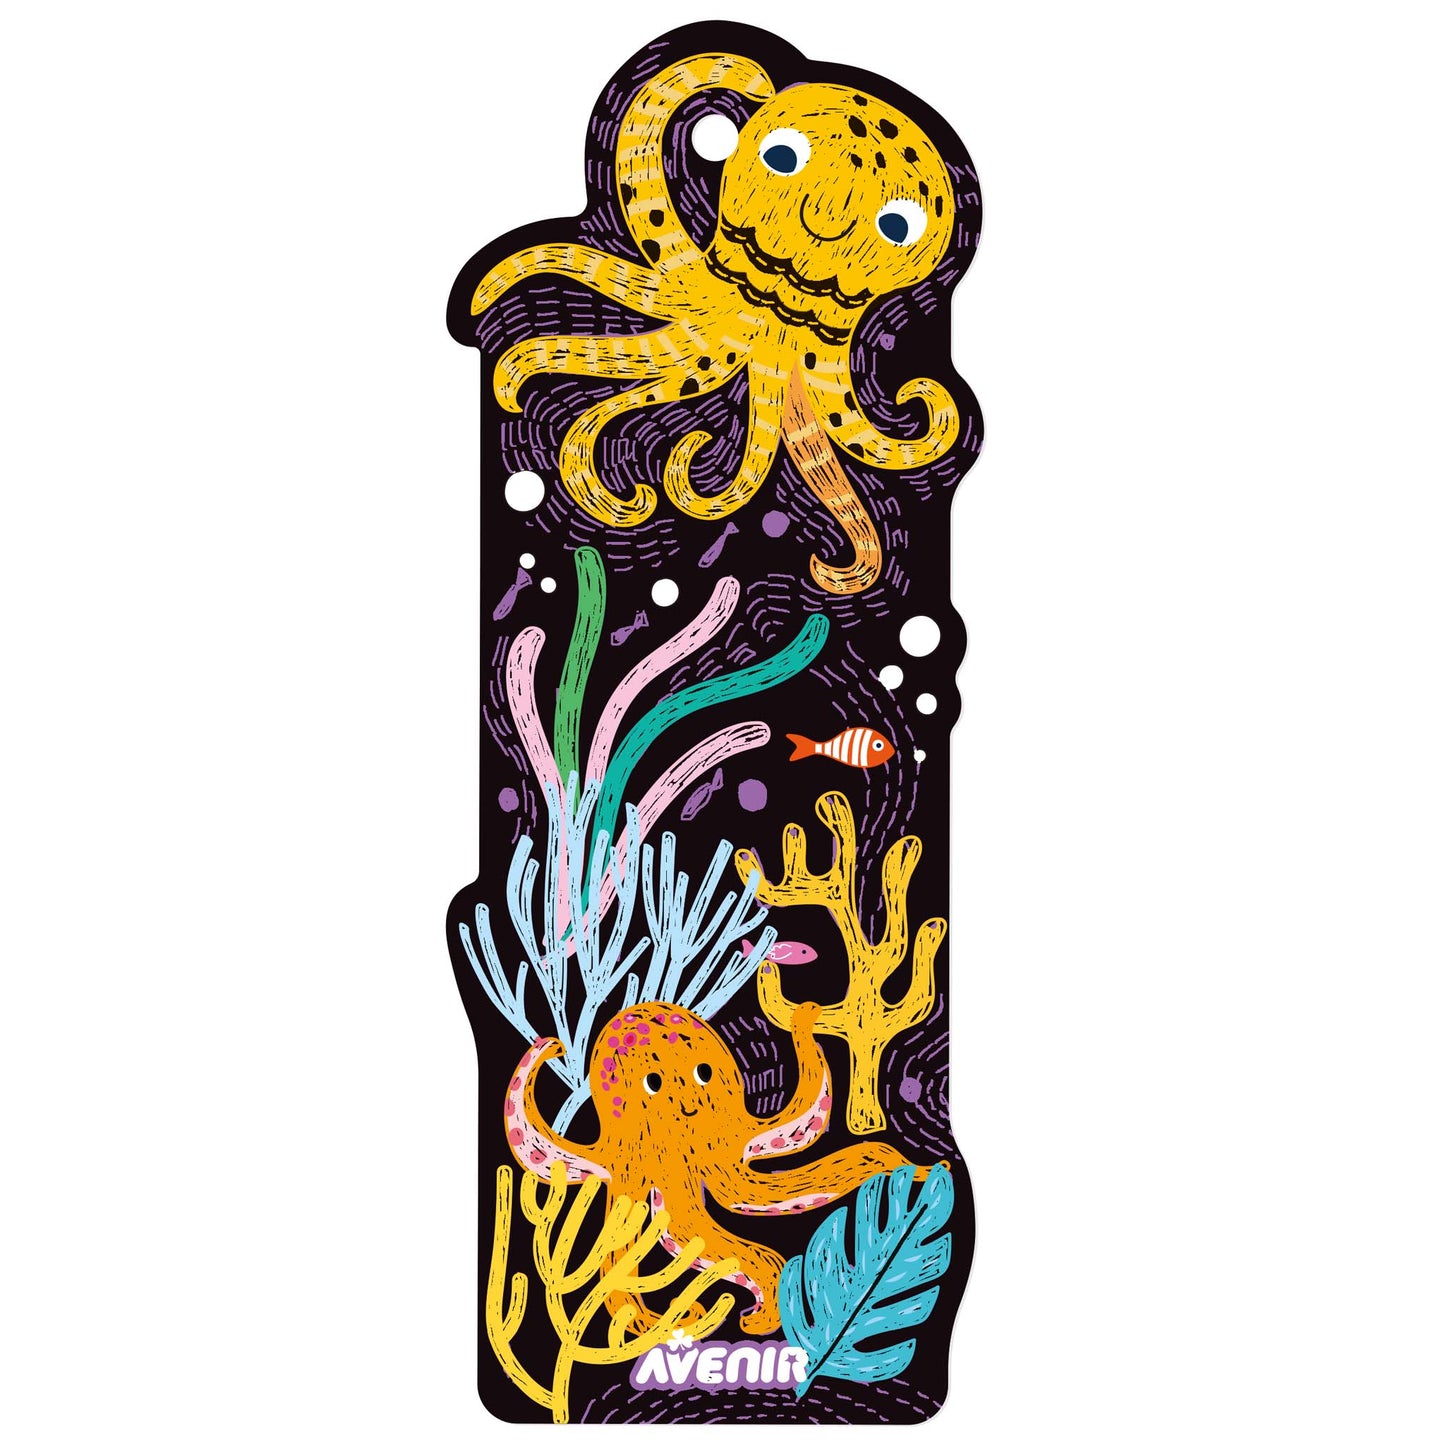 Scratch Bookmarks Sea Animals